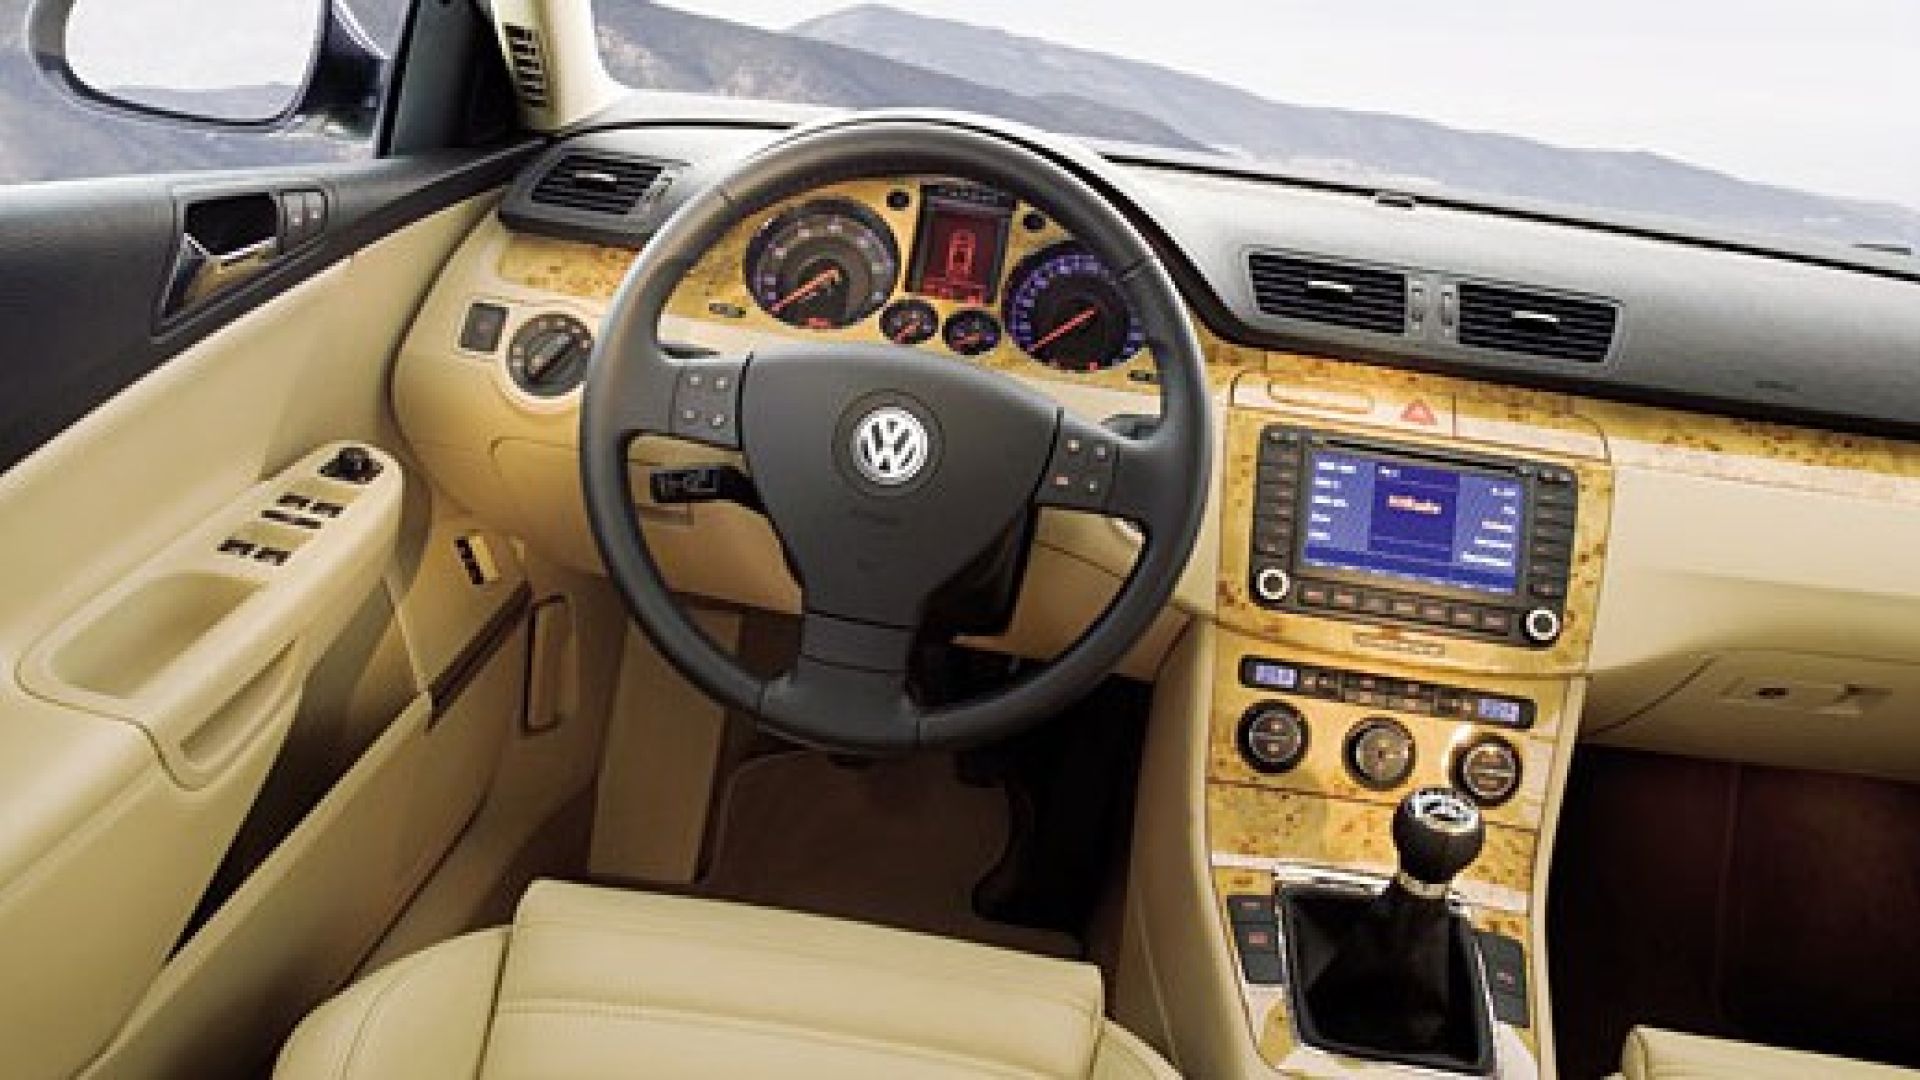 Пассат б6 1.8 160. Фольксваген Пассат b6 салон. Volkswagen Passat 2006 салон. Volkswagen Passat b6 салон. Volkswagen Passat 2005 Interior.